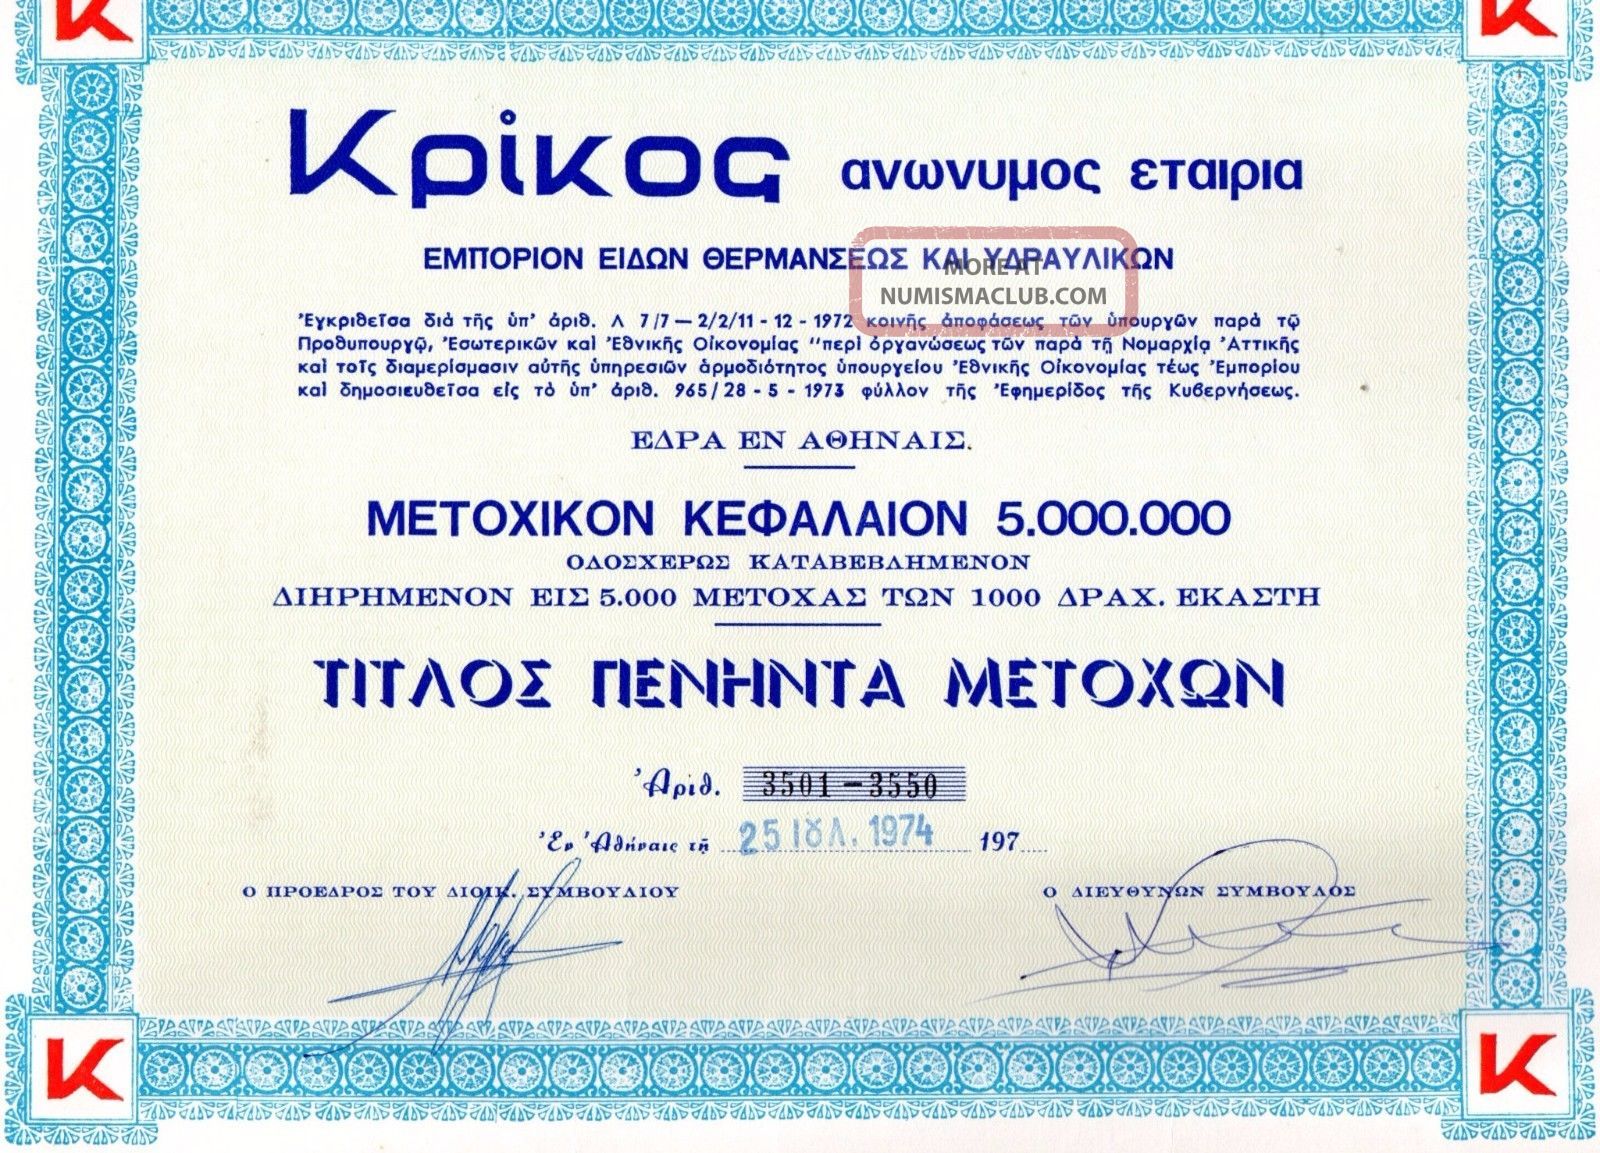 Gr.  Heating,  Hydraulics Co Krikos Title Of 50 Shares Bond Stock Certificate 1974 World photo